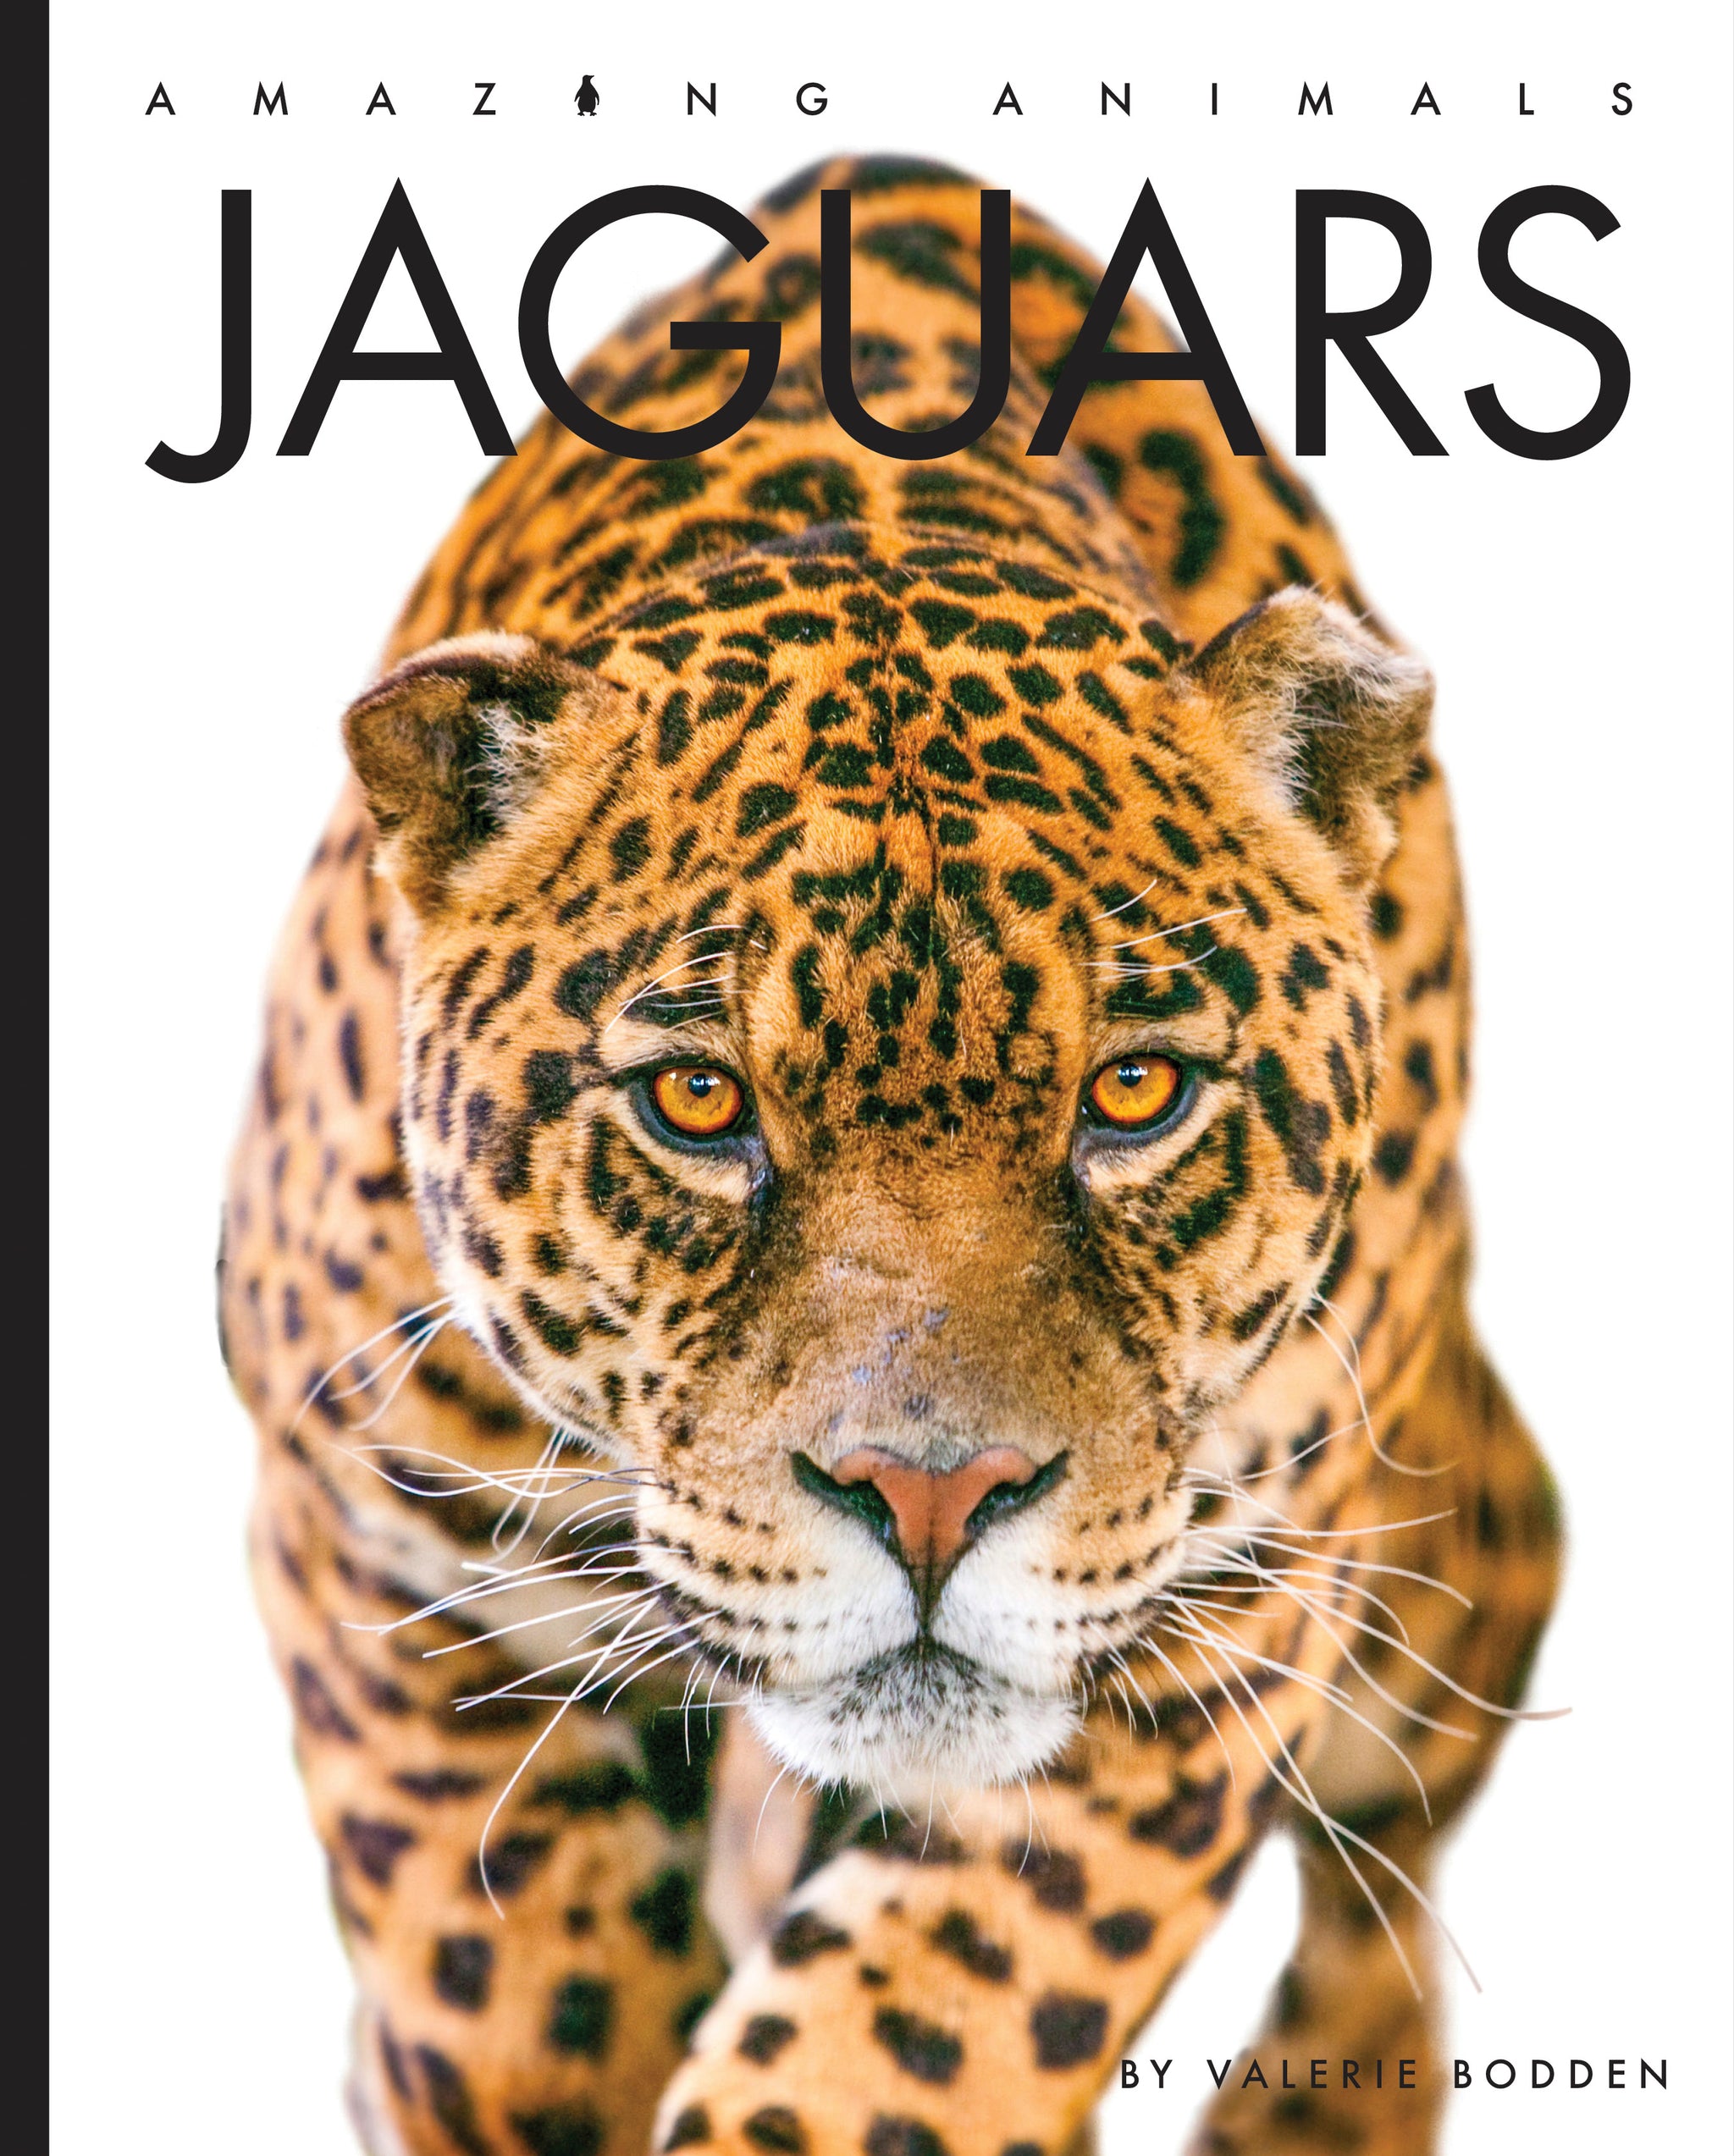 jaguar life cycle